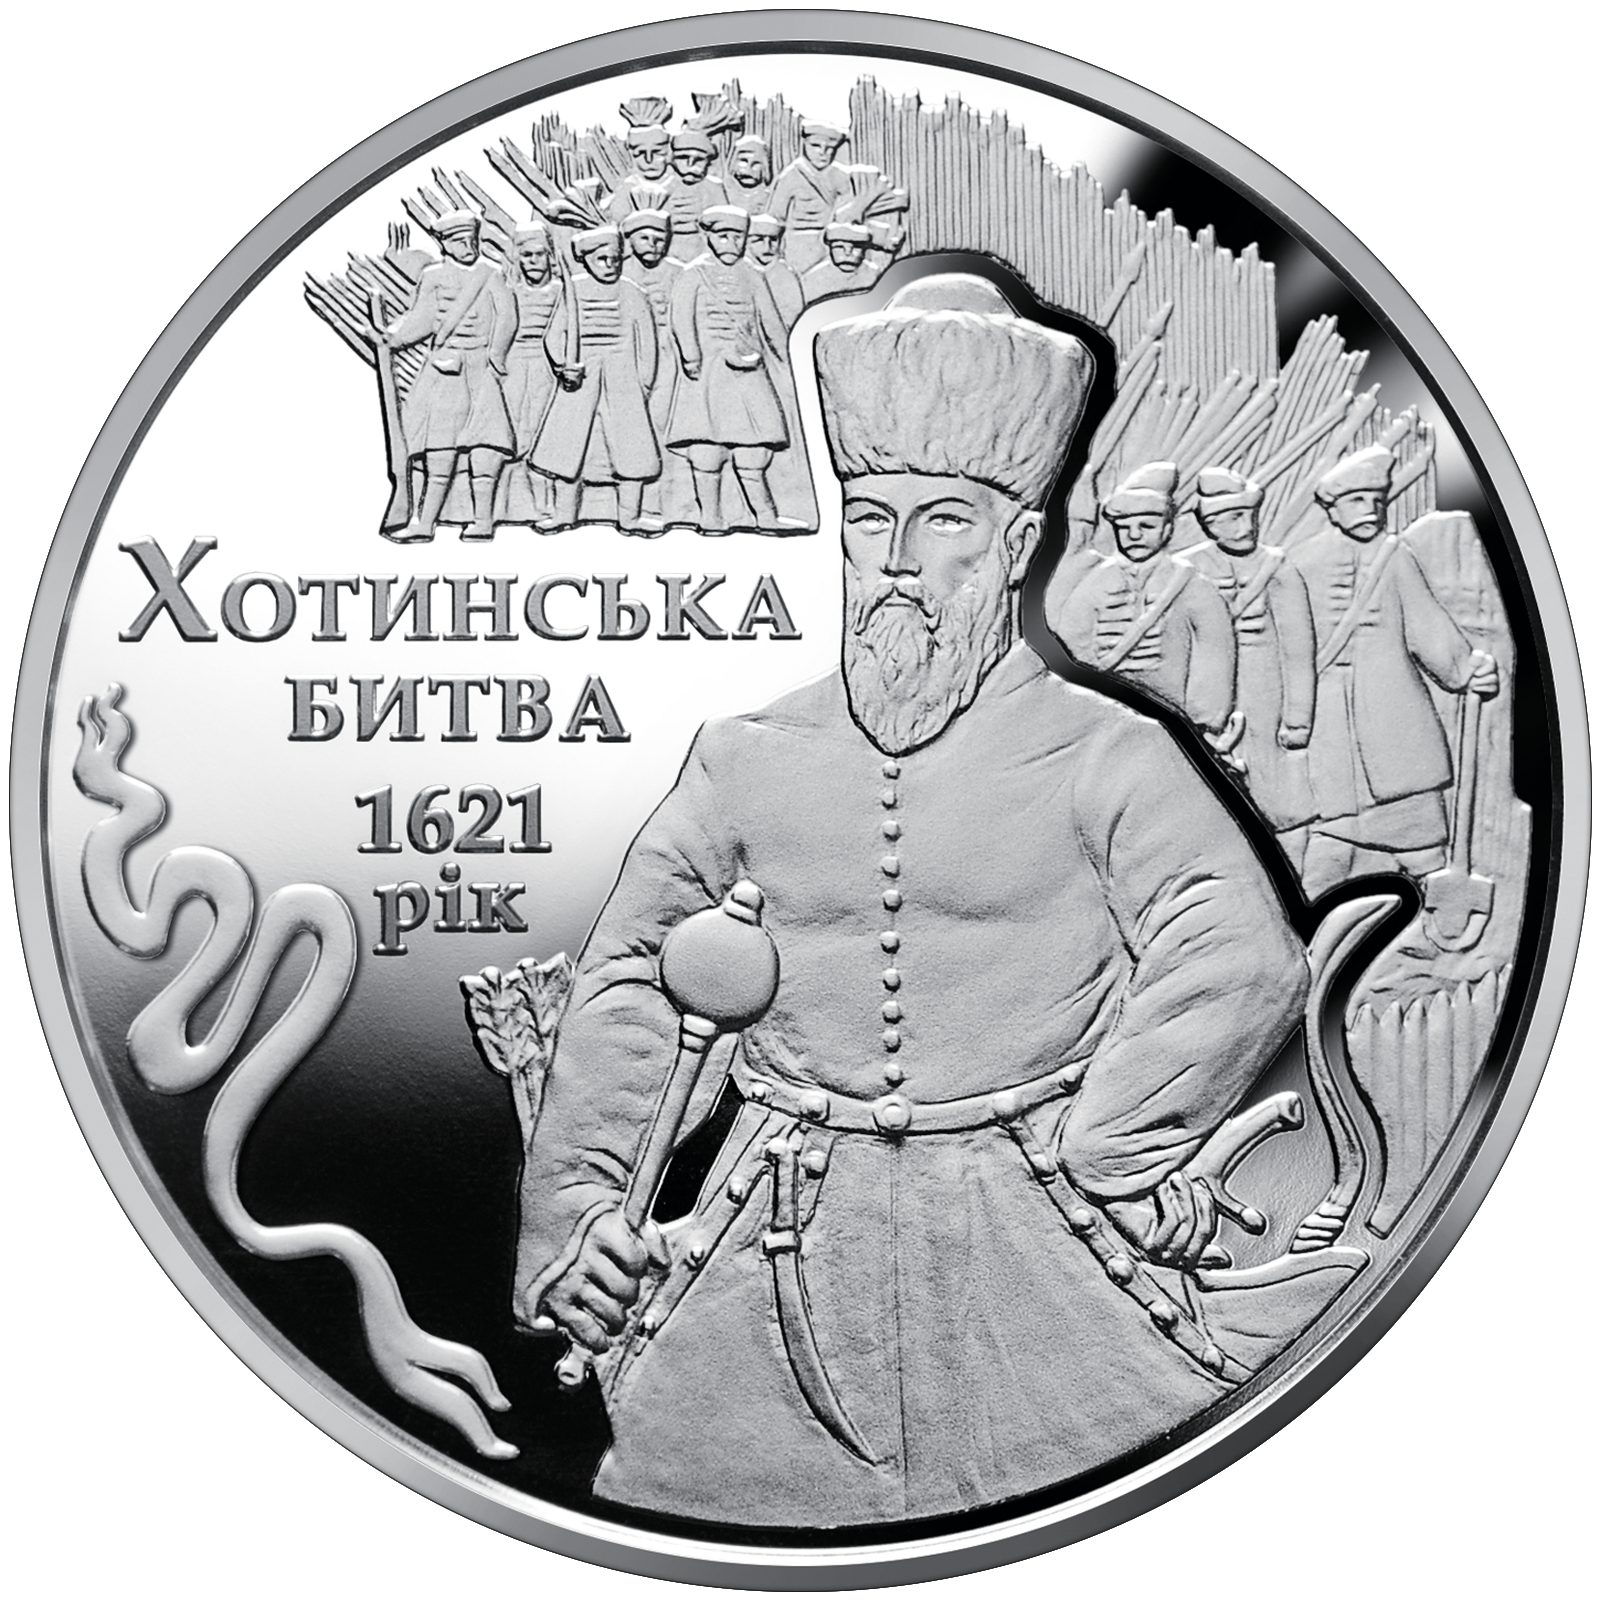 Нацбанк вводит в обращение монету «Хотинская битва»: как выглядят памятные 5 гривен - фото 2